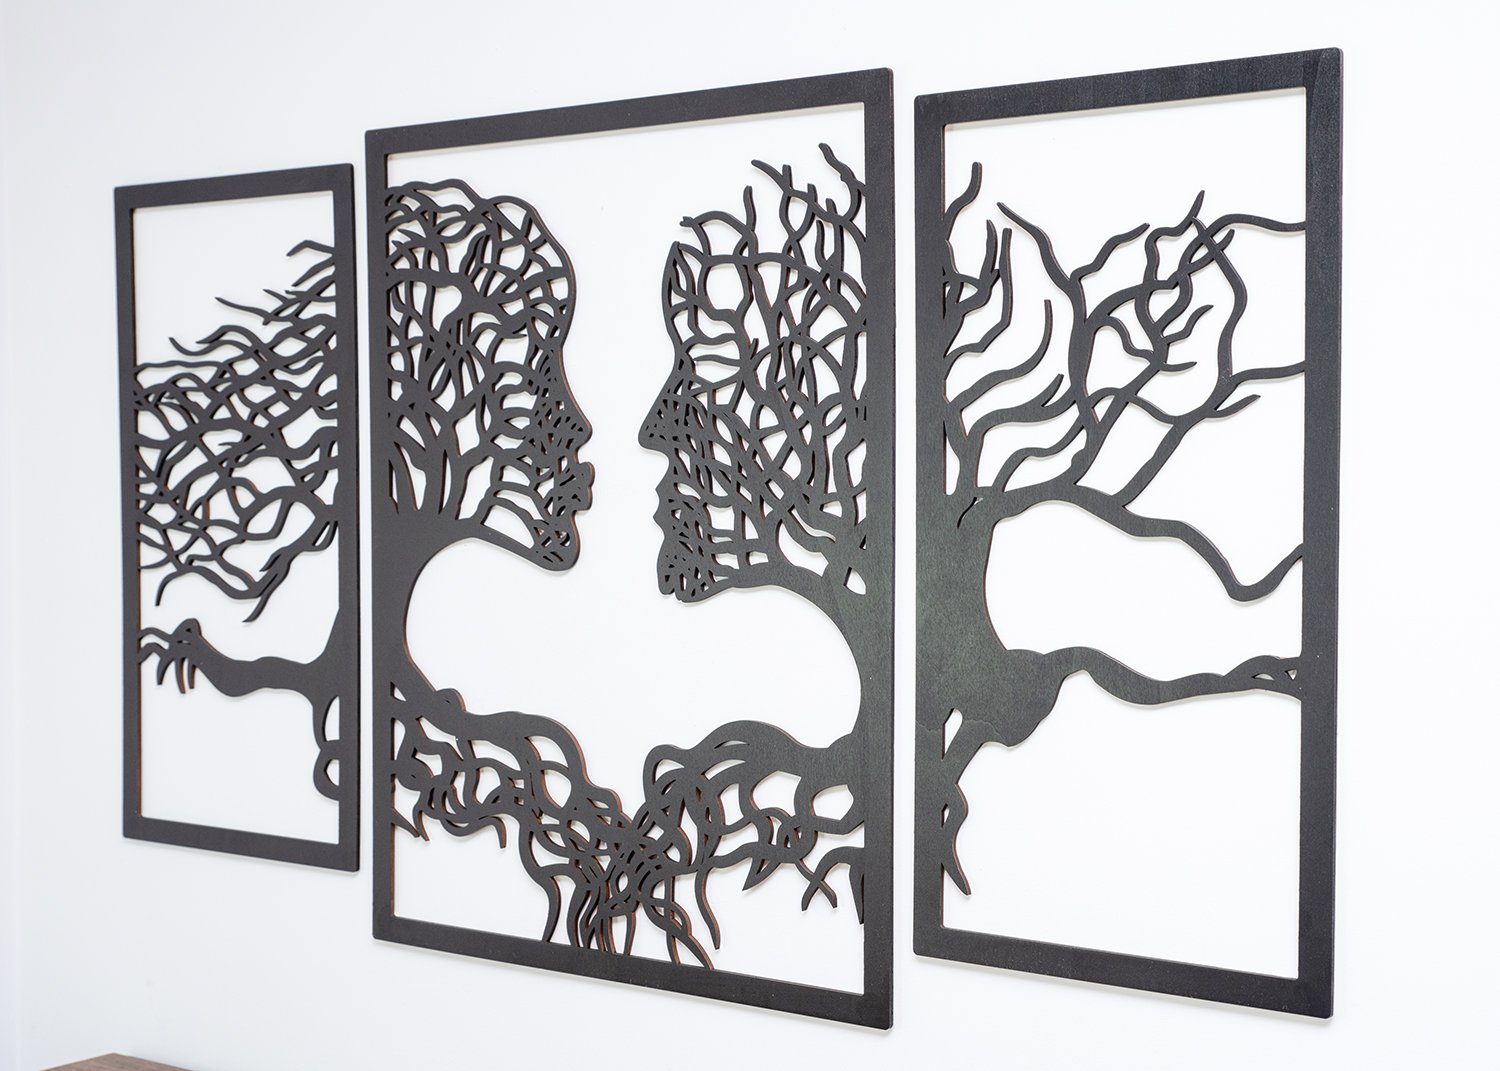 ORNAMENTI Holzbild Wanddekoration, Baum, 3D Handmade grosse Gesichter Wandpaneel